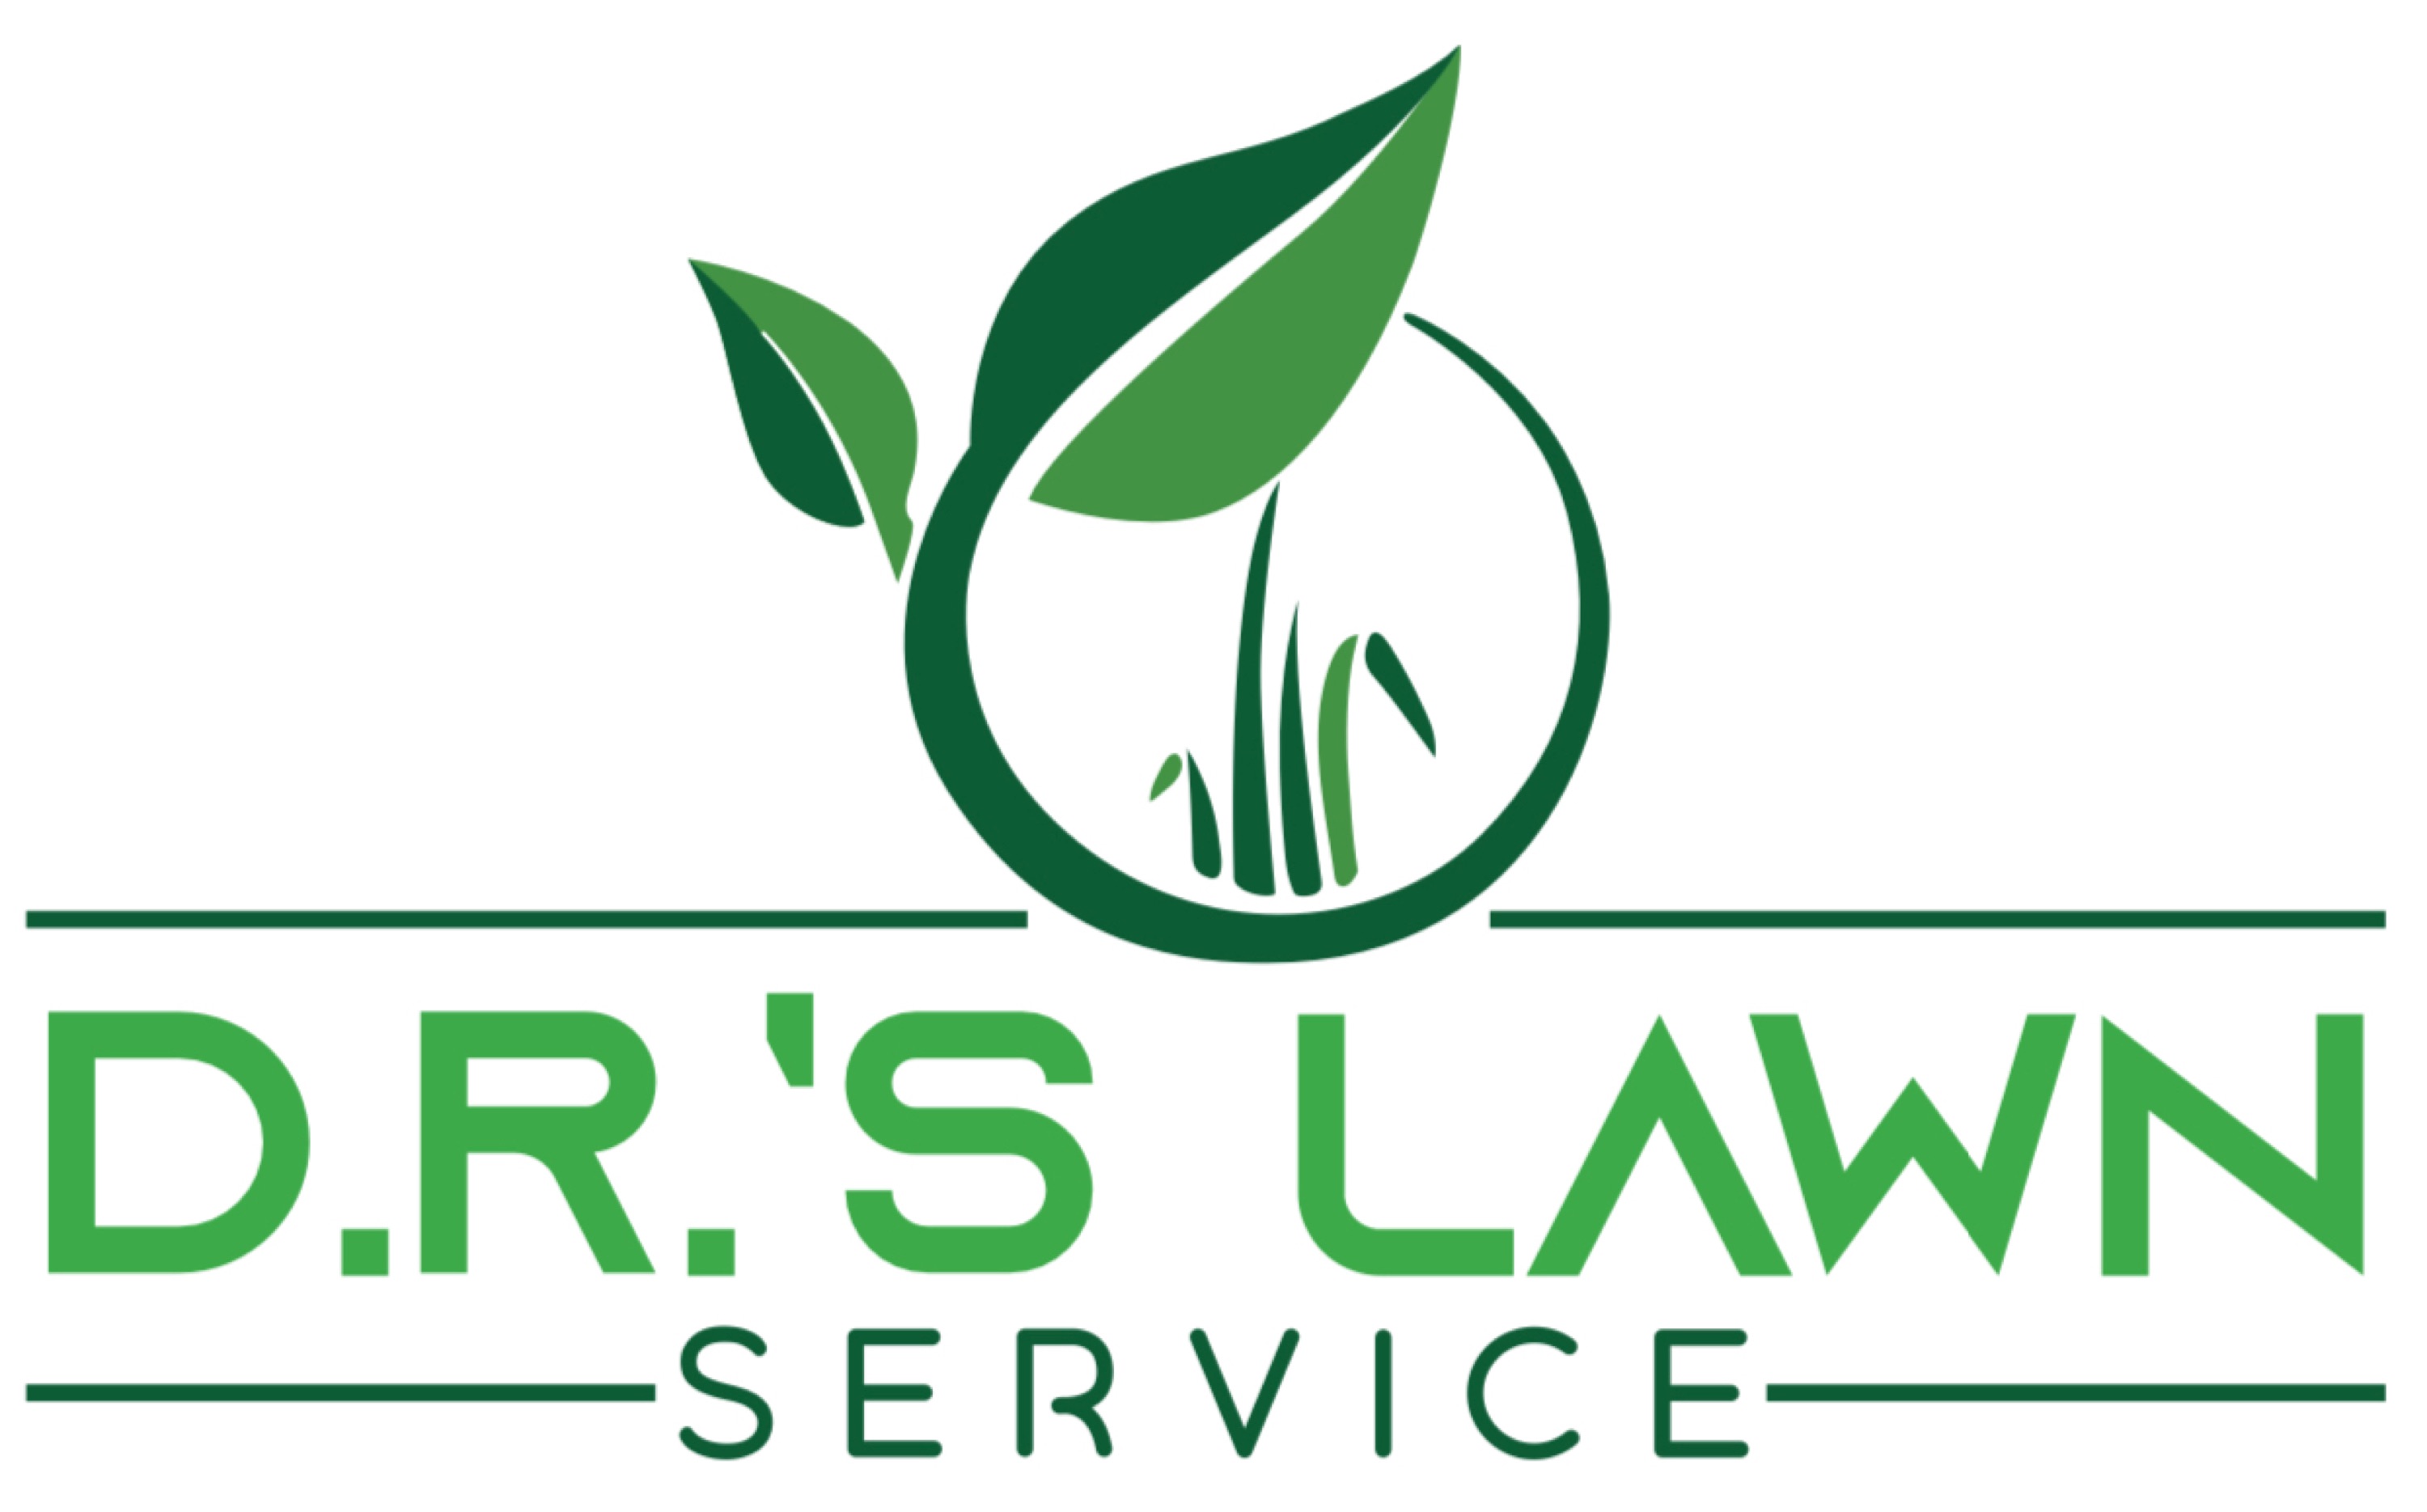 D.R's Lawn Service Logo